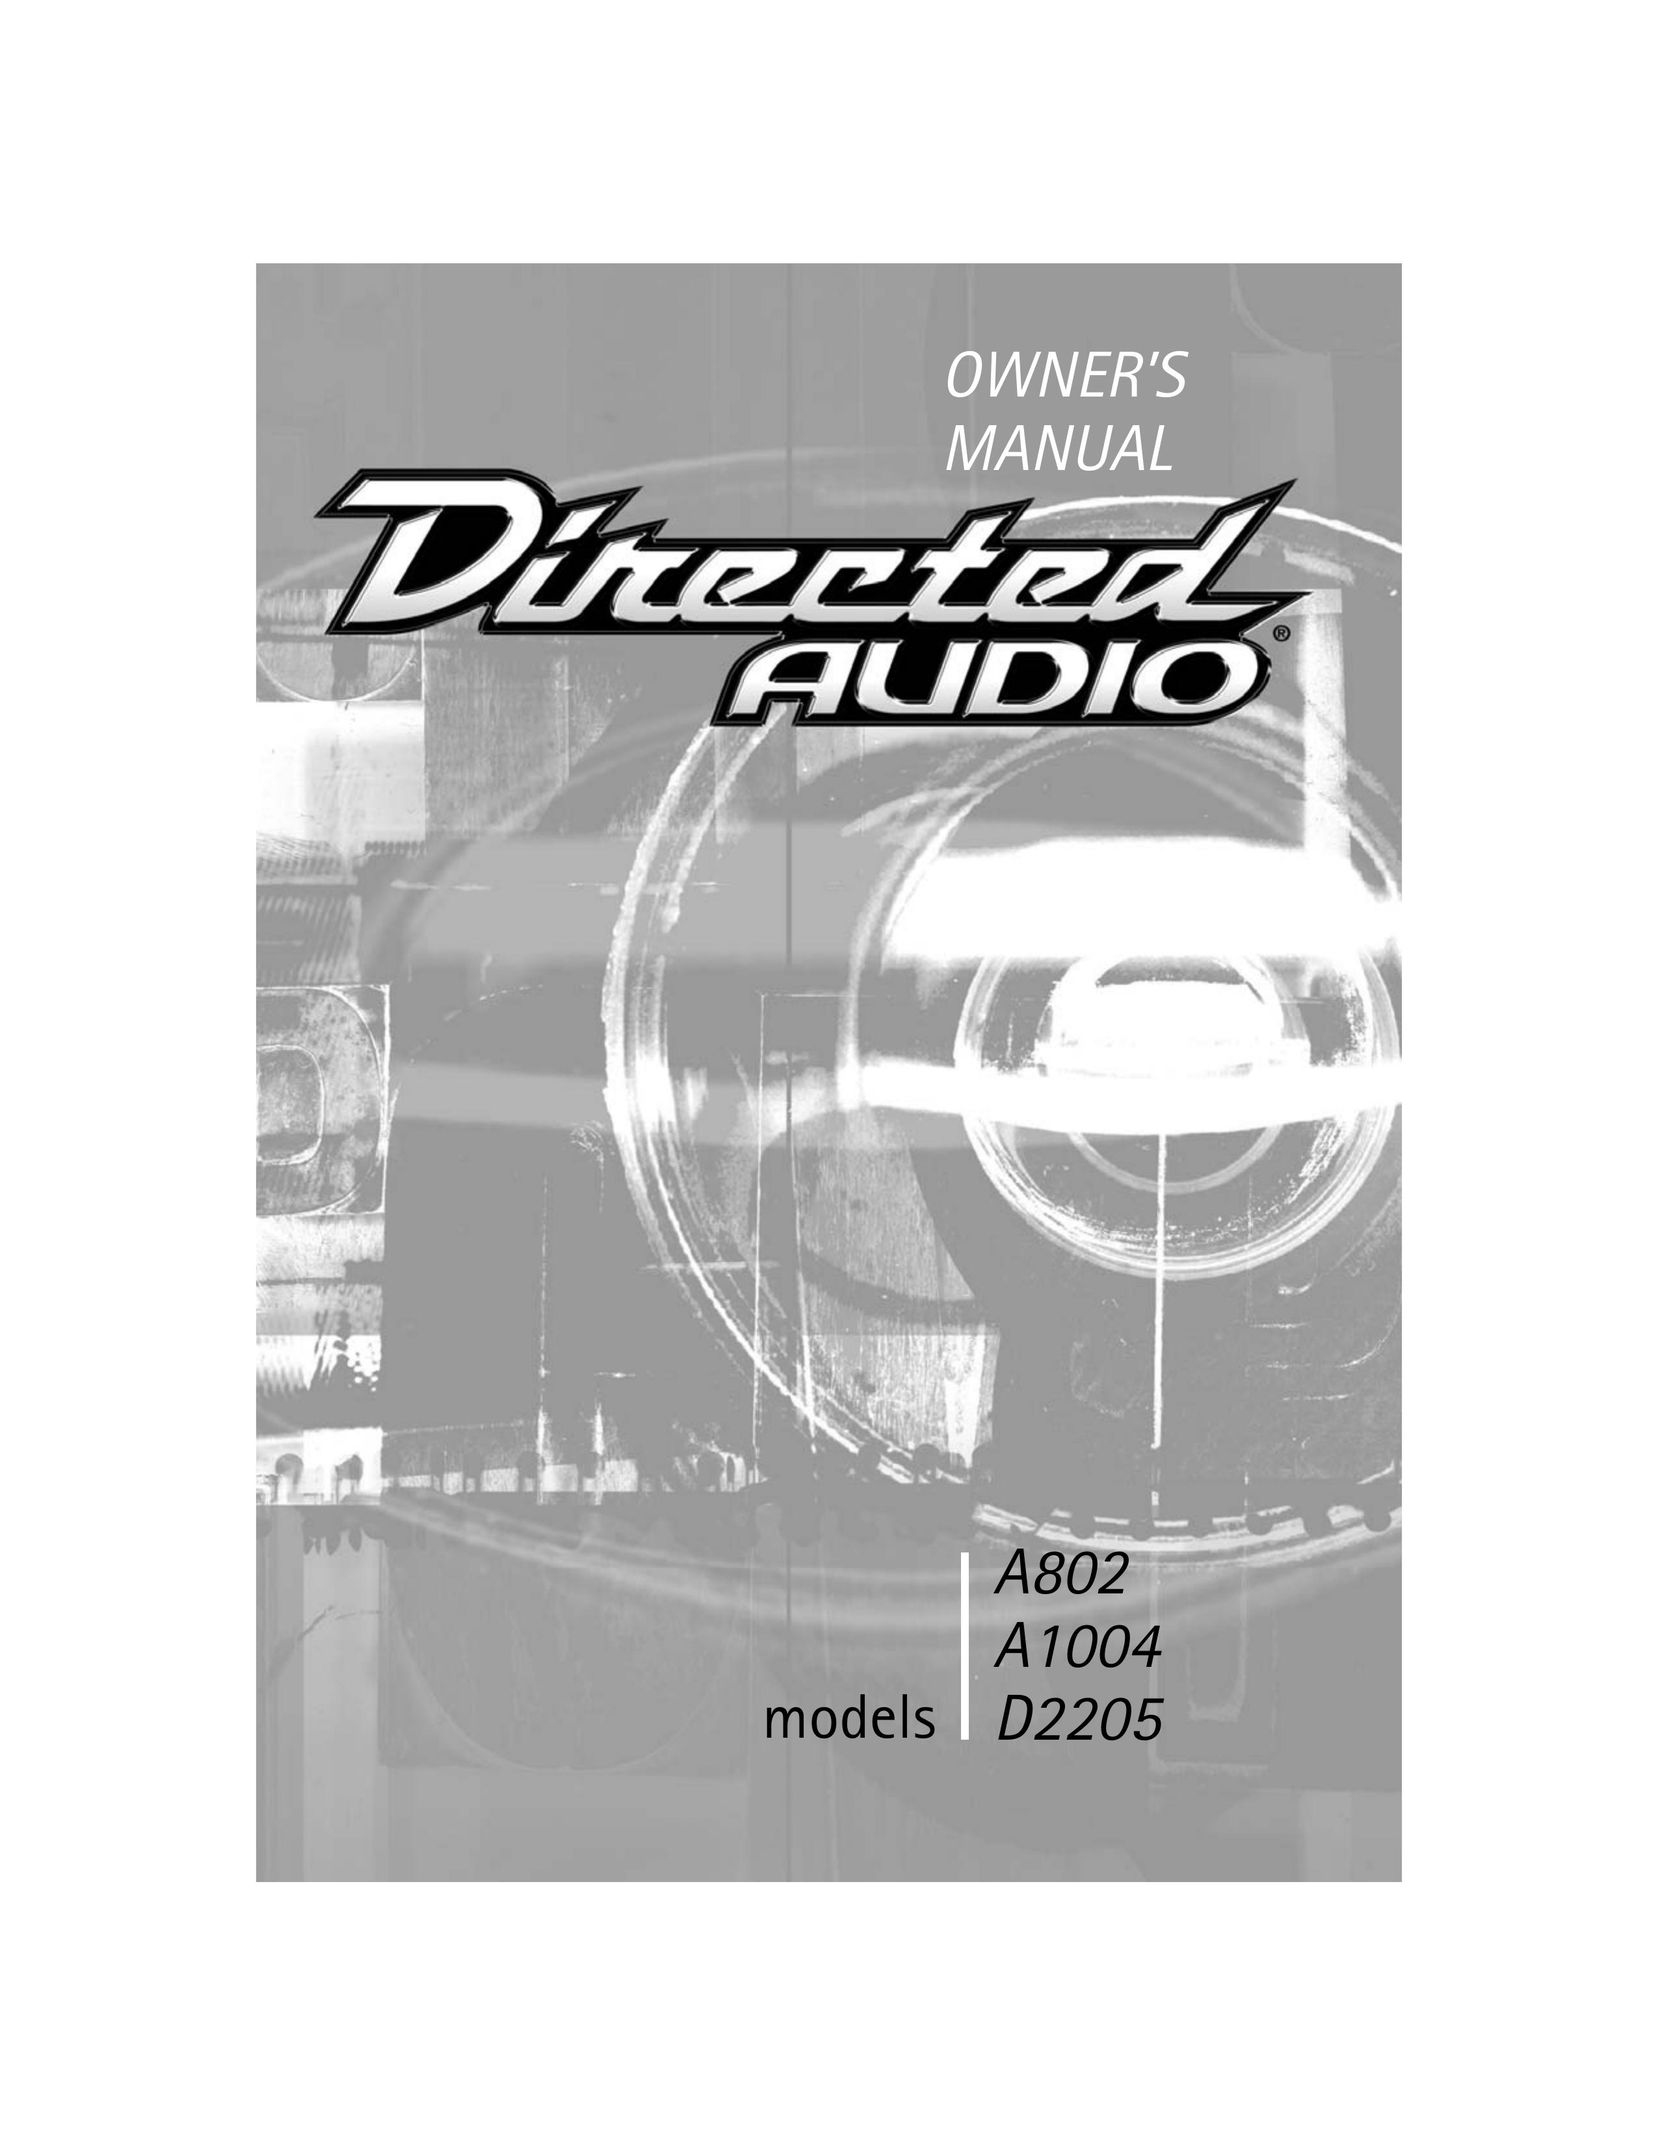 Directed Electronics A1004 Car Amplifier User Manual